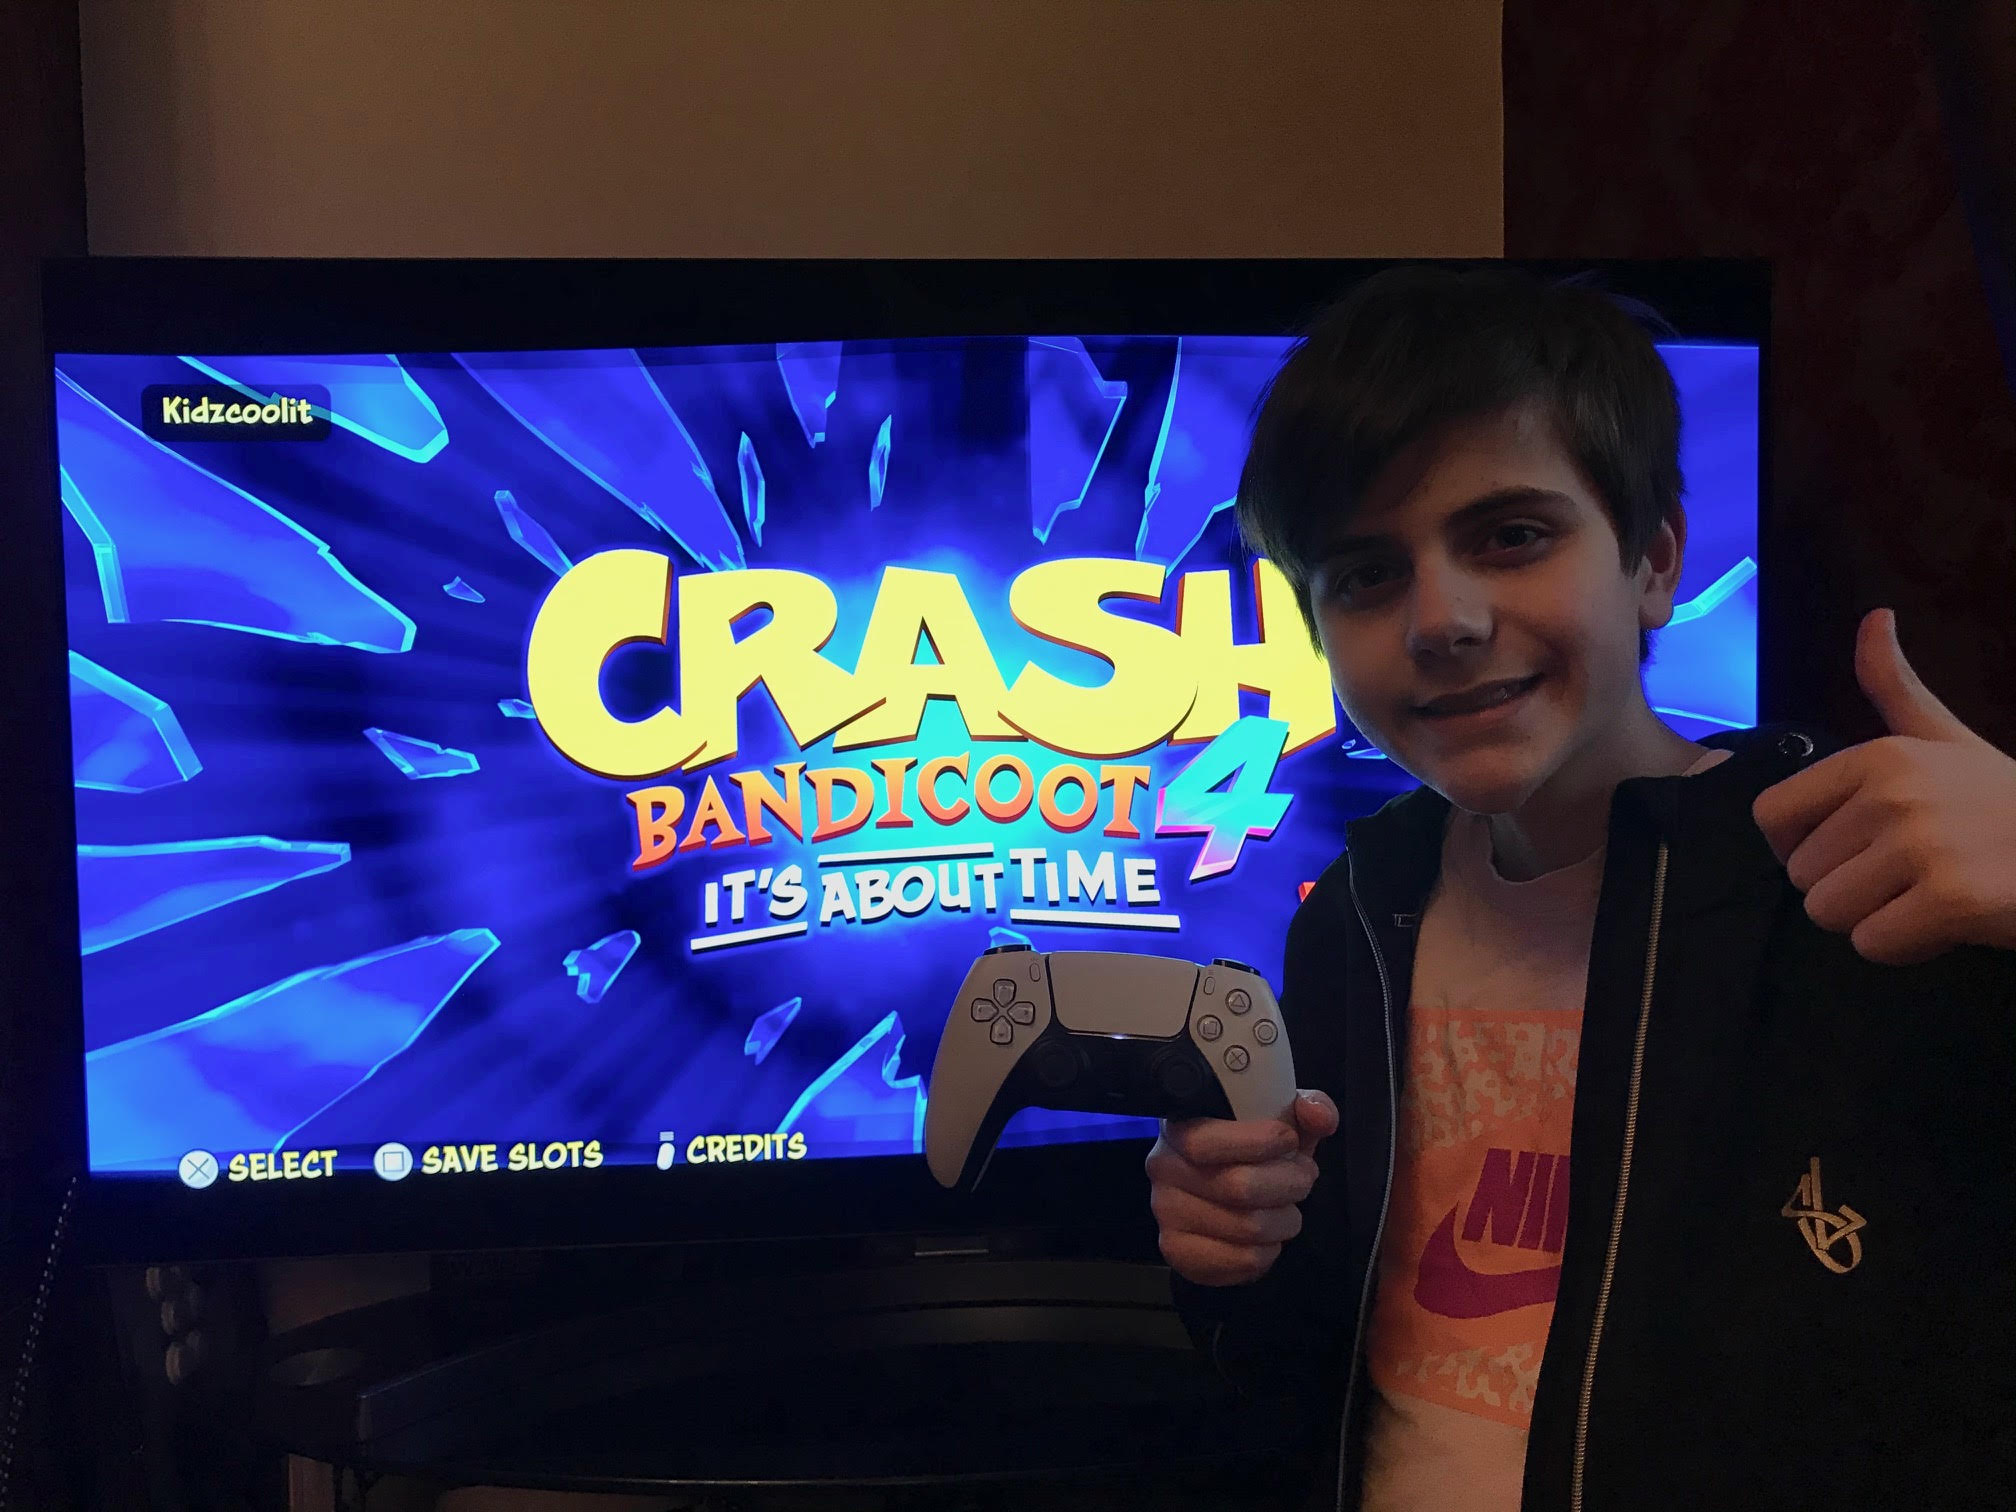 Crash Bandicoot 4: It's About Time (PS5) 